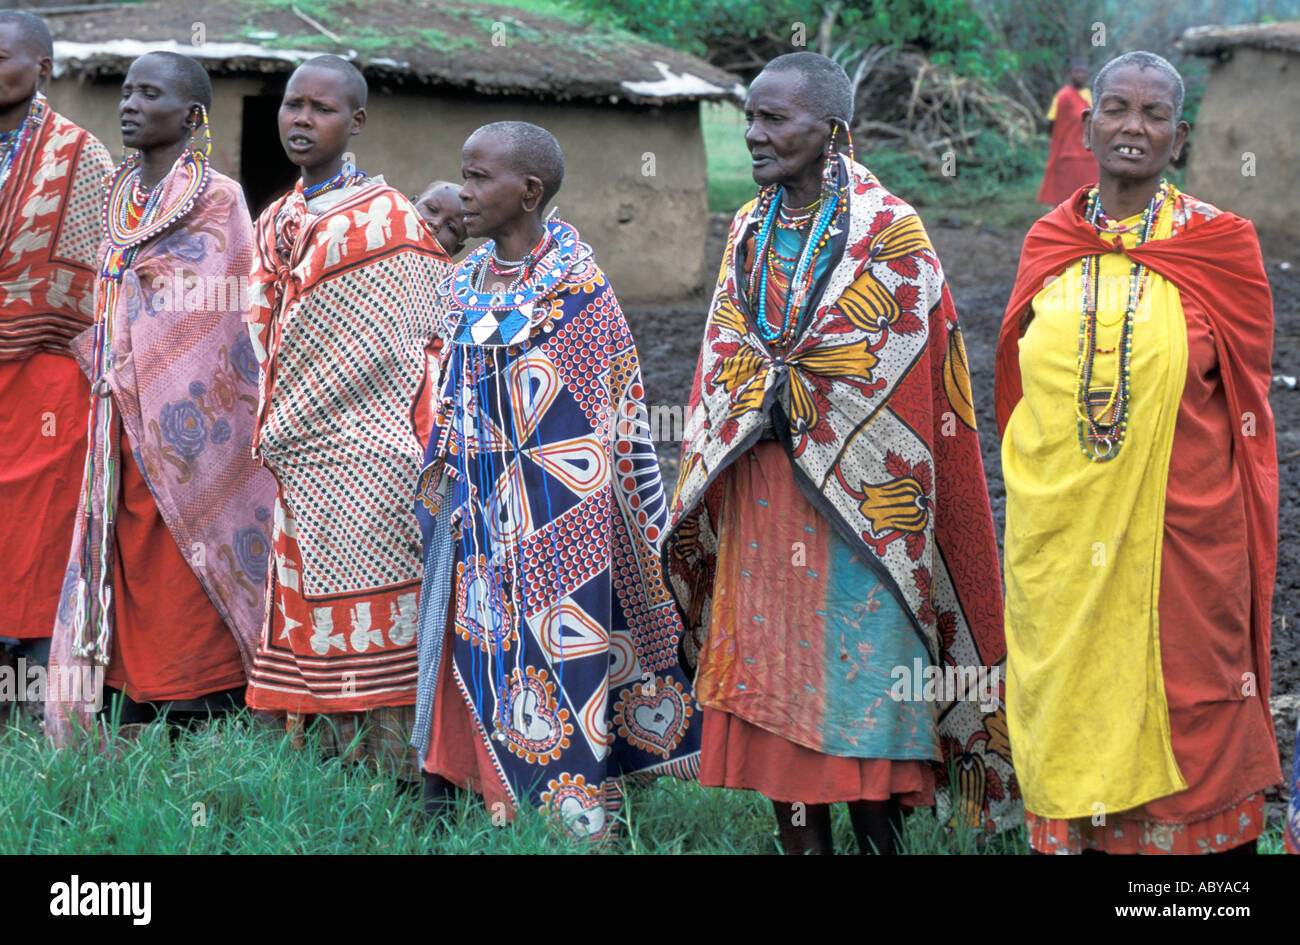 AFRICA KENYA Masai Mara National Reserve Masai women in traditional kanga cloths and beaded jewelry sing Stock Photo